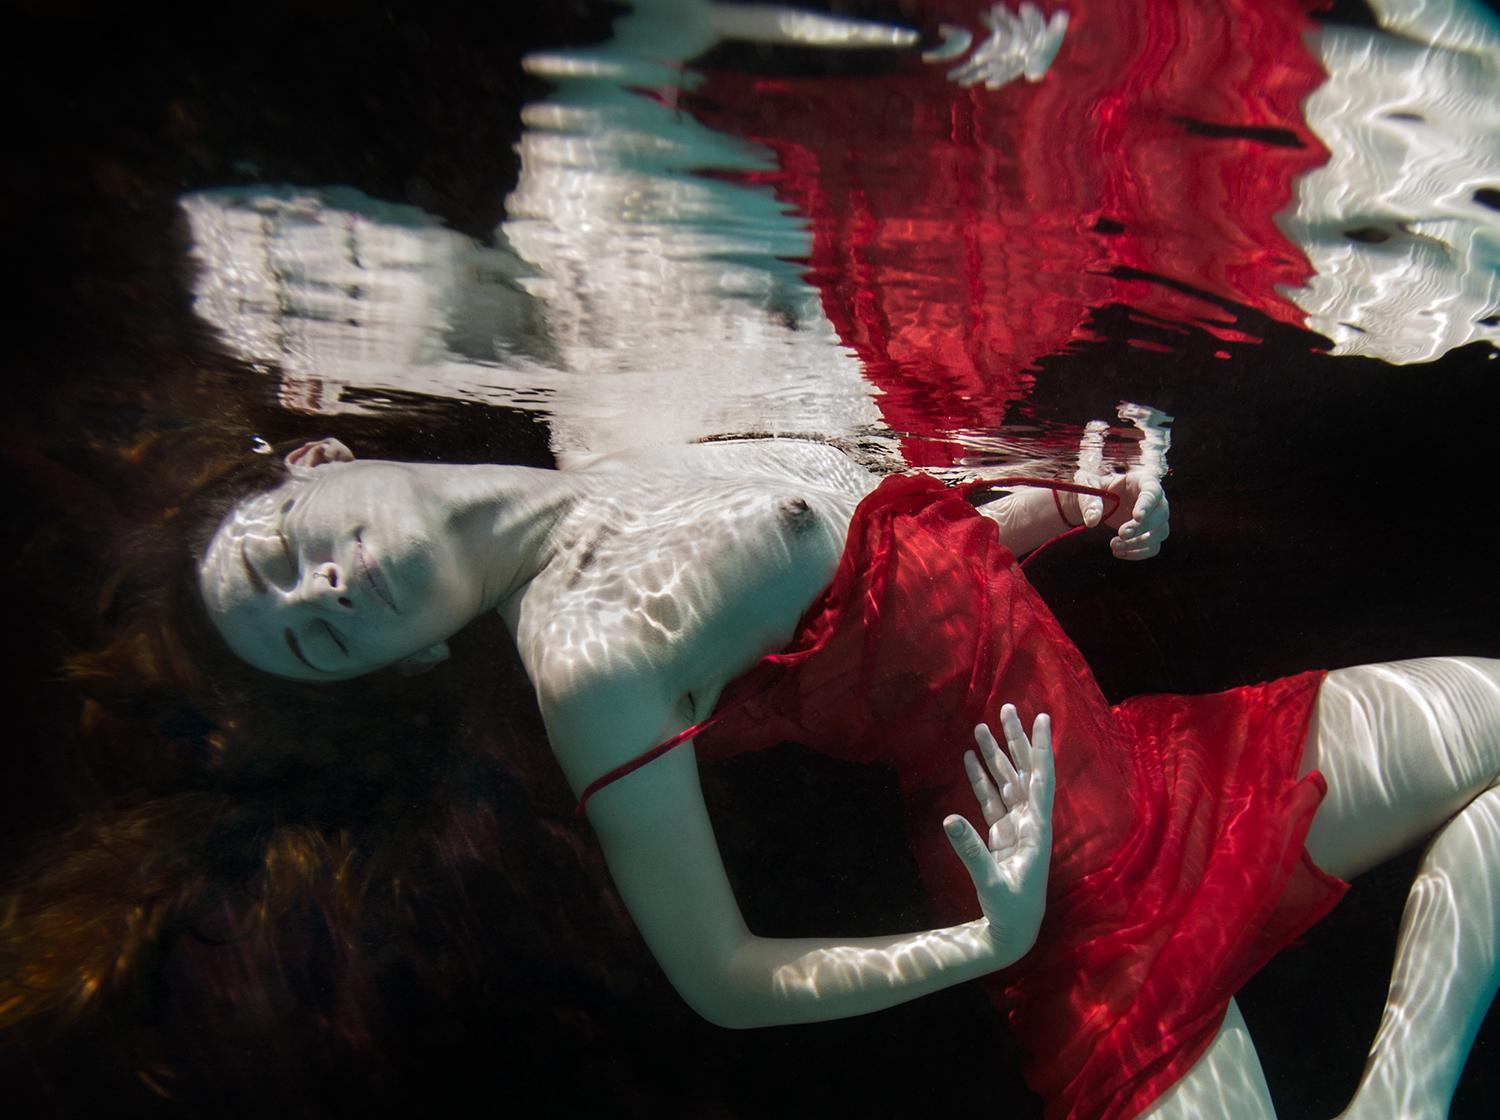 Adventure - underwater nude photograph - print on aluminum 30x36